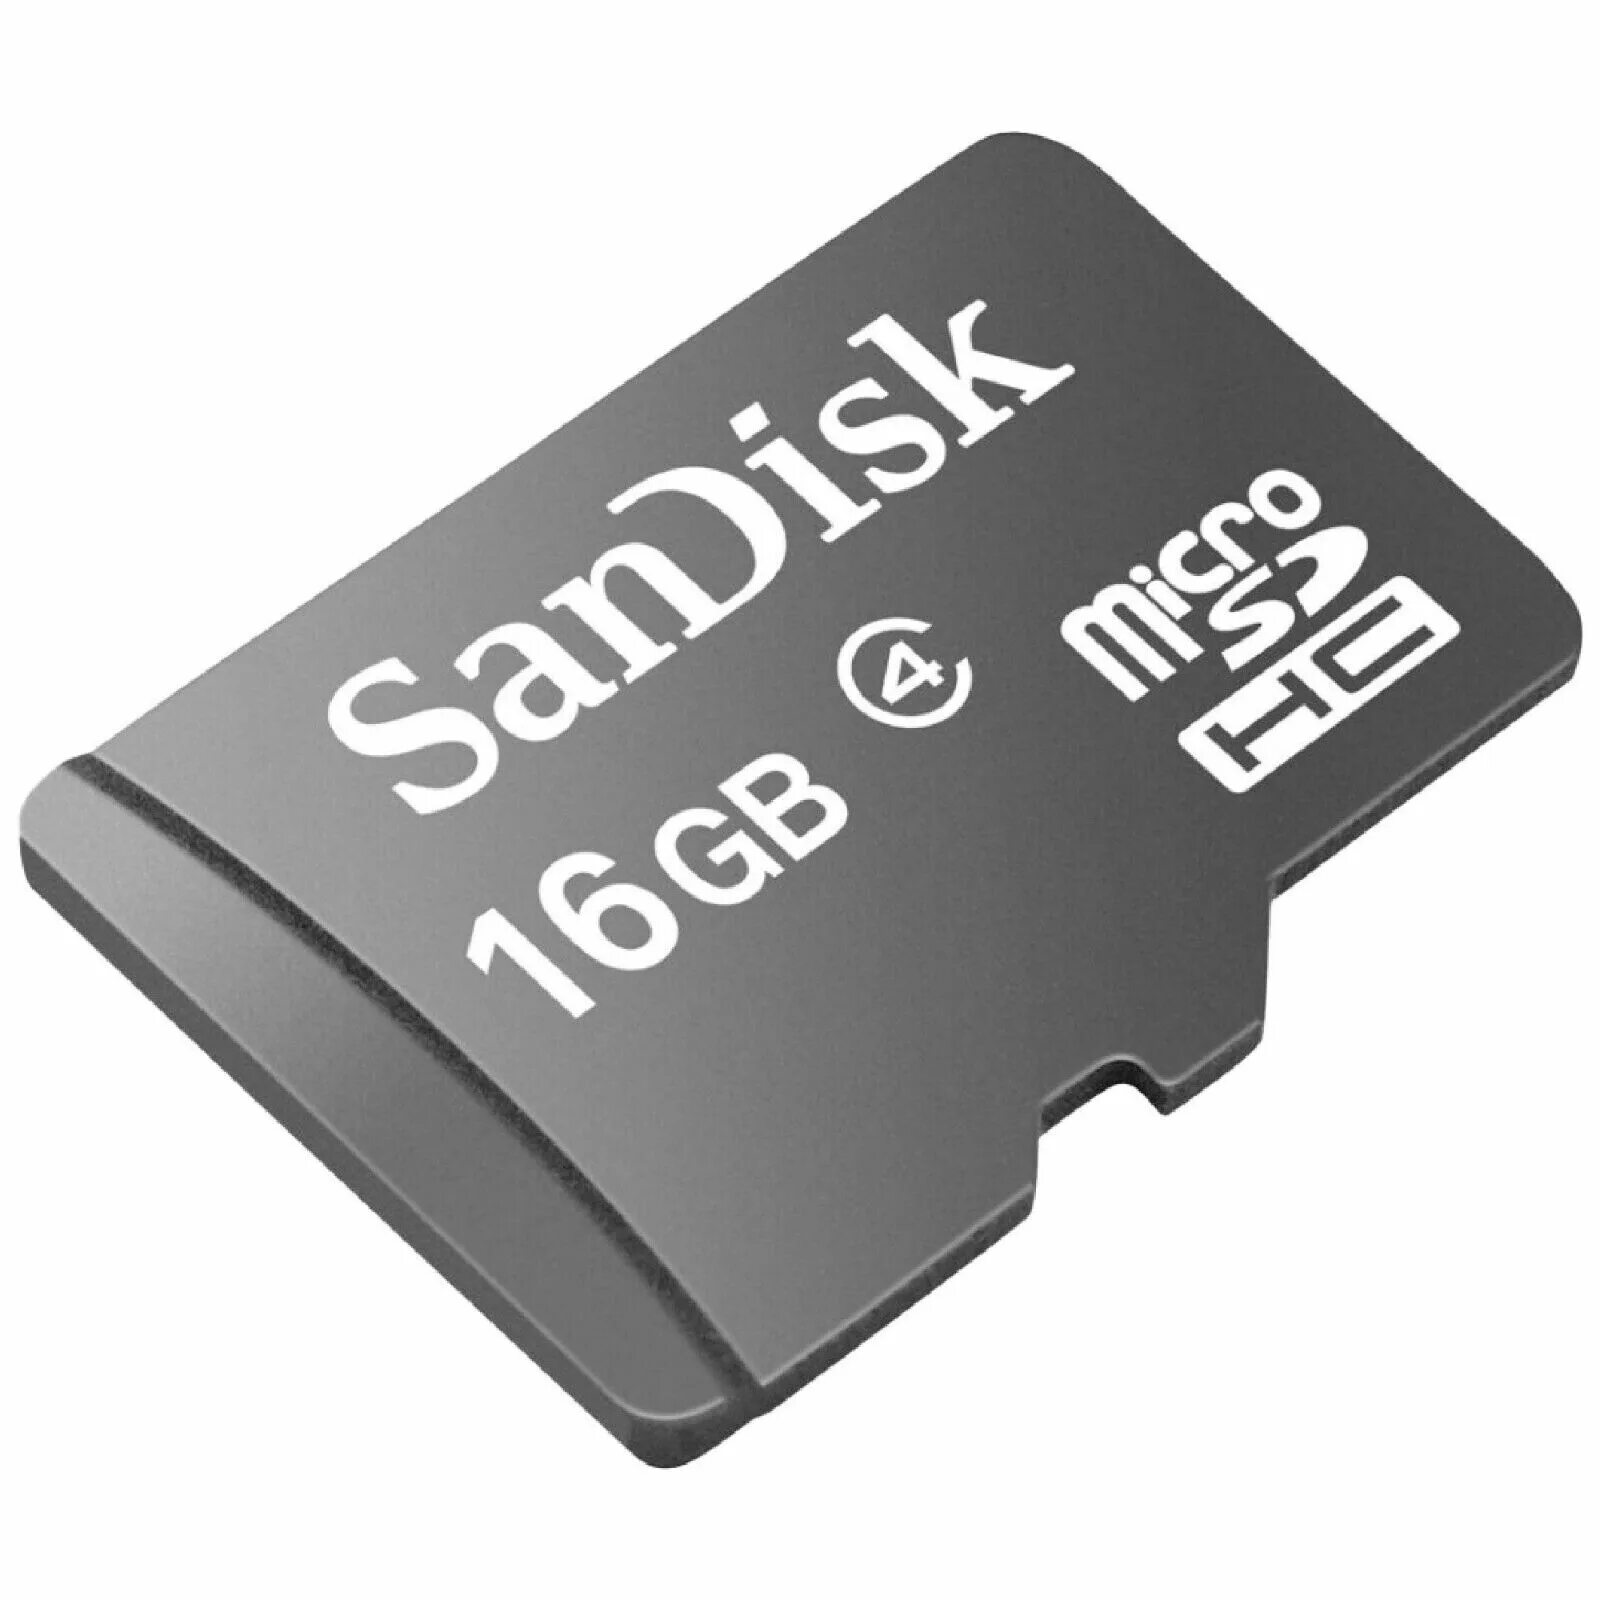 Комплект карт памяти. MICROSD 2gb SANDISK. САНДИСК 8 ГБ карта памяти. Карта памяти 32 ГБ MICROSDHC Kingston. SD карта 4 ГБ.